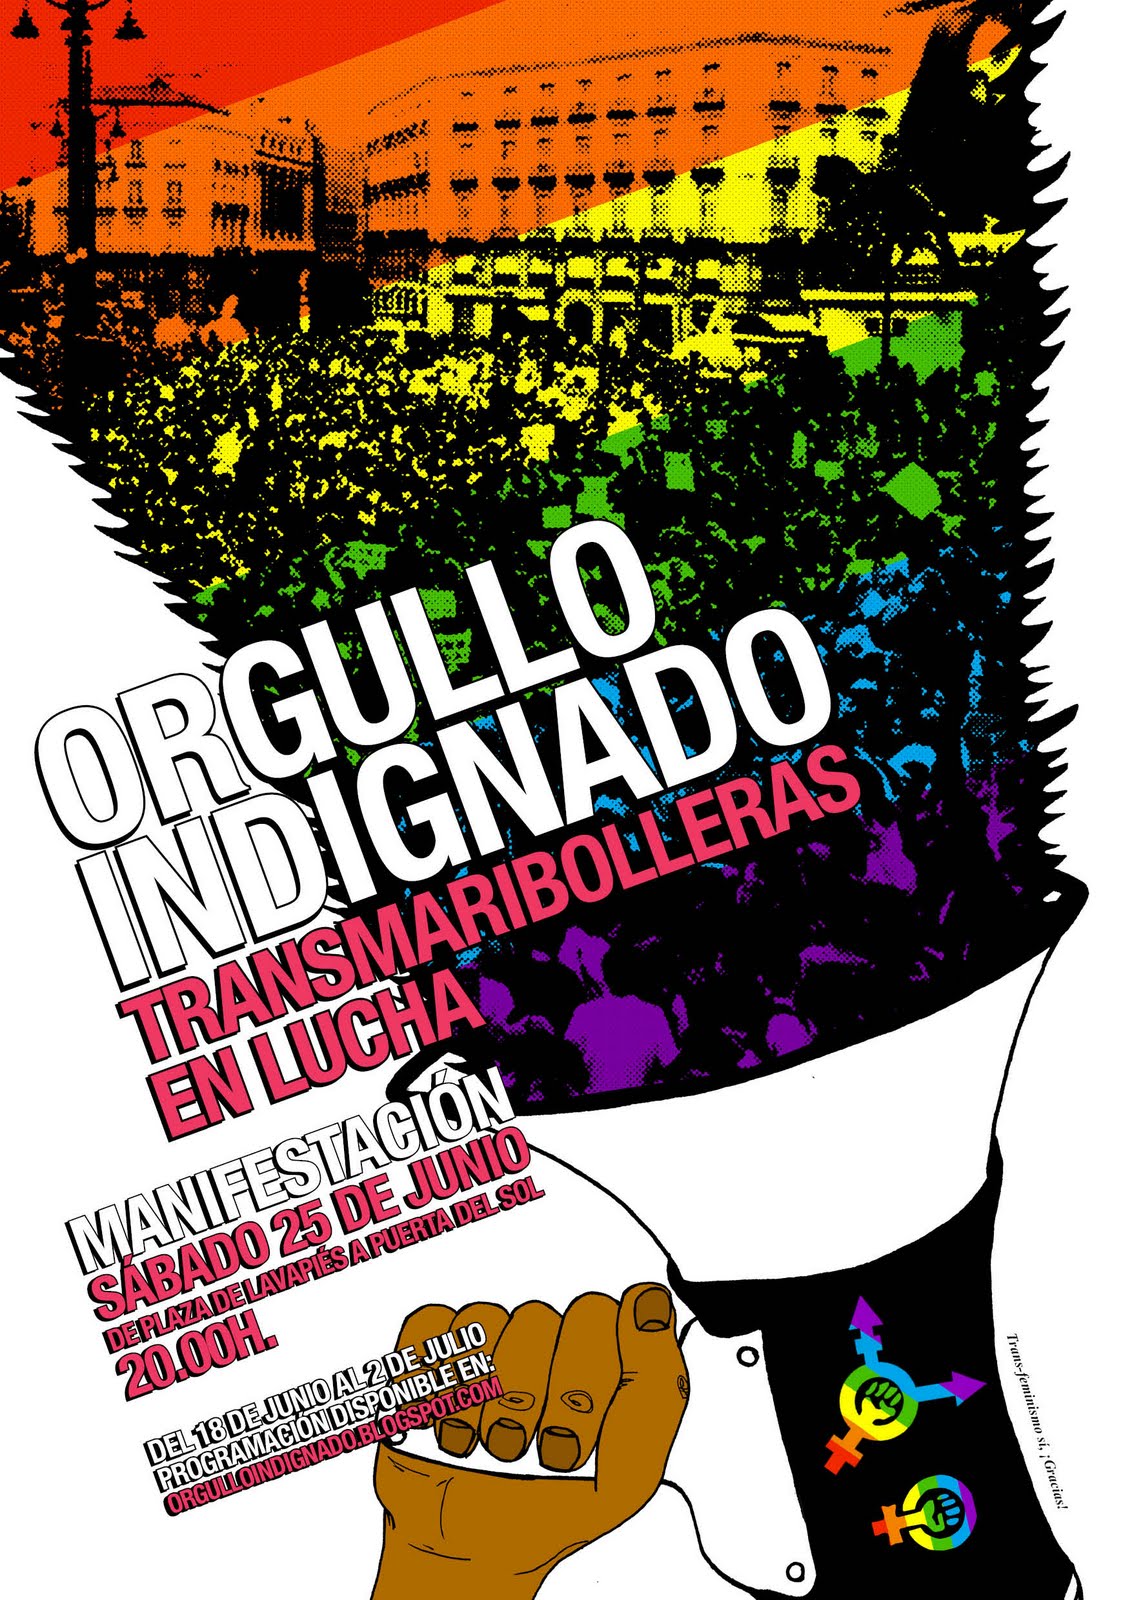 Orgullo_indignado_web.jpg